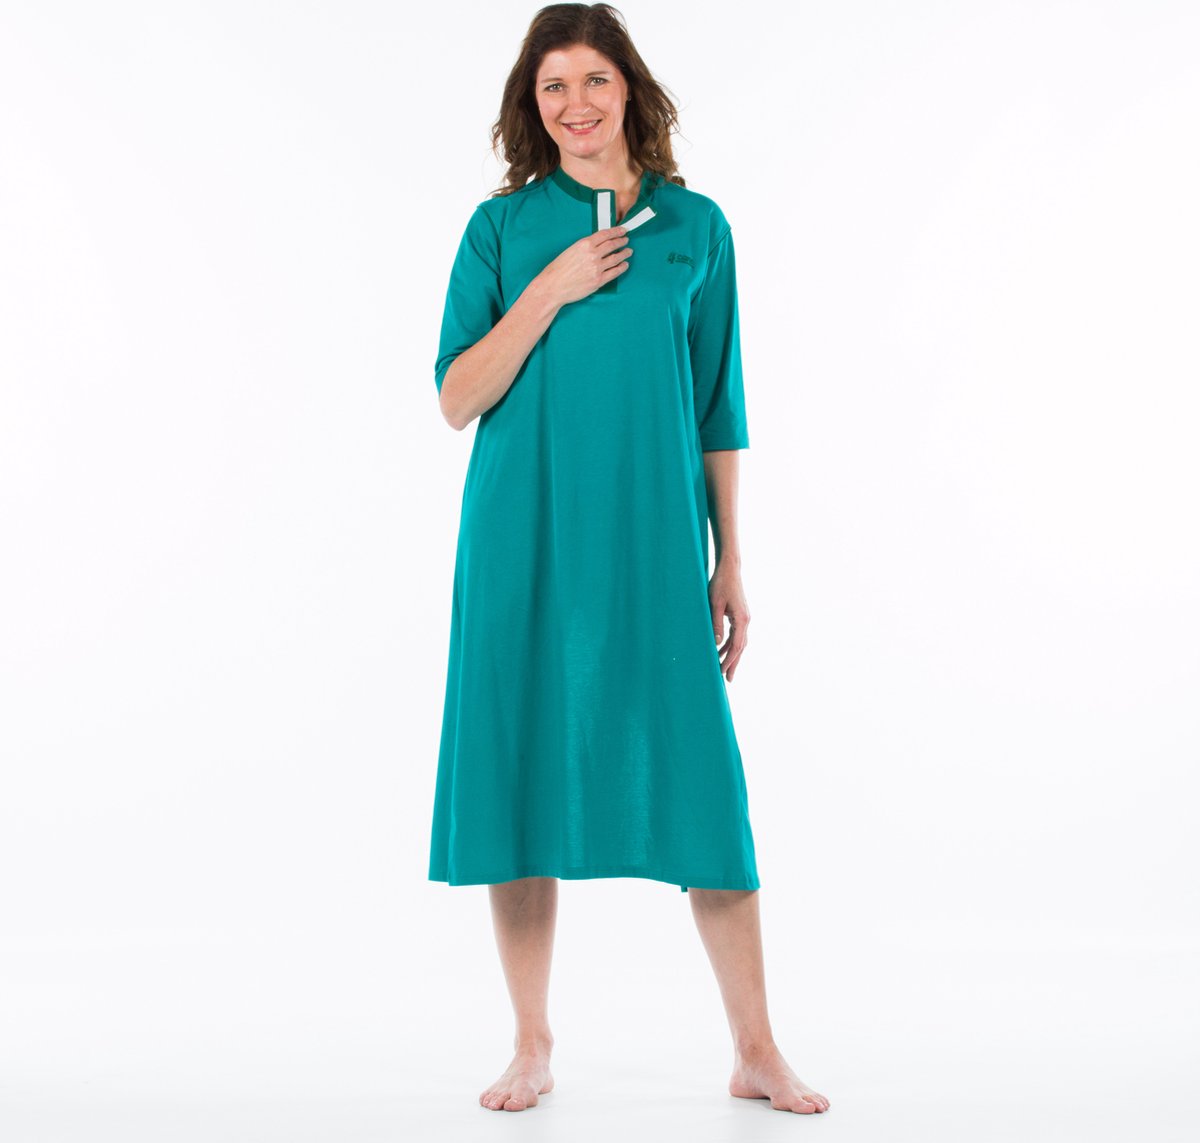 Nachthemd achter open - Nachthemd met drukknopen - Zorg nachthemd- Groen - XL